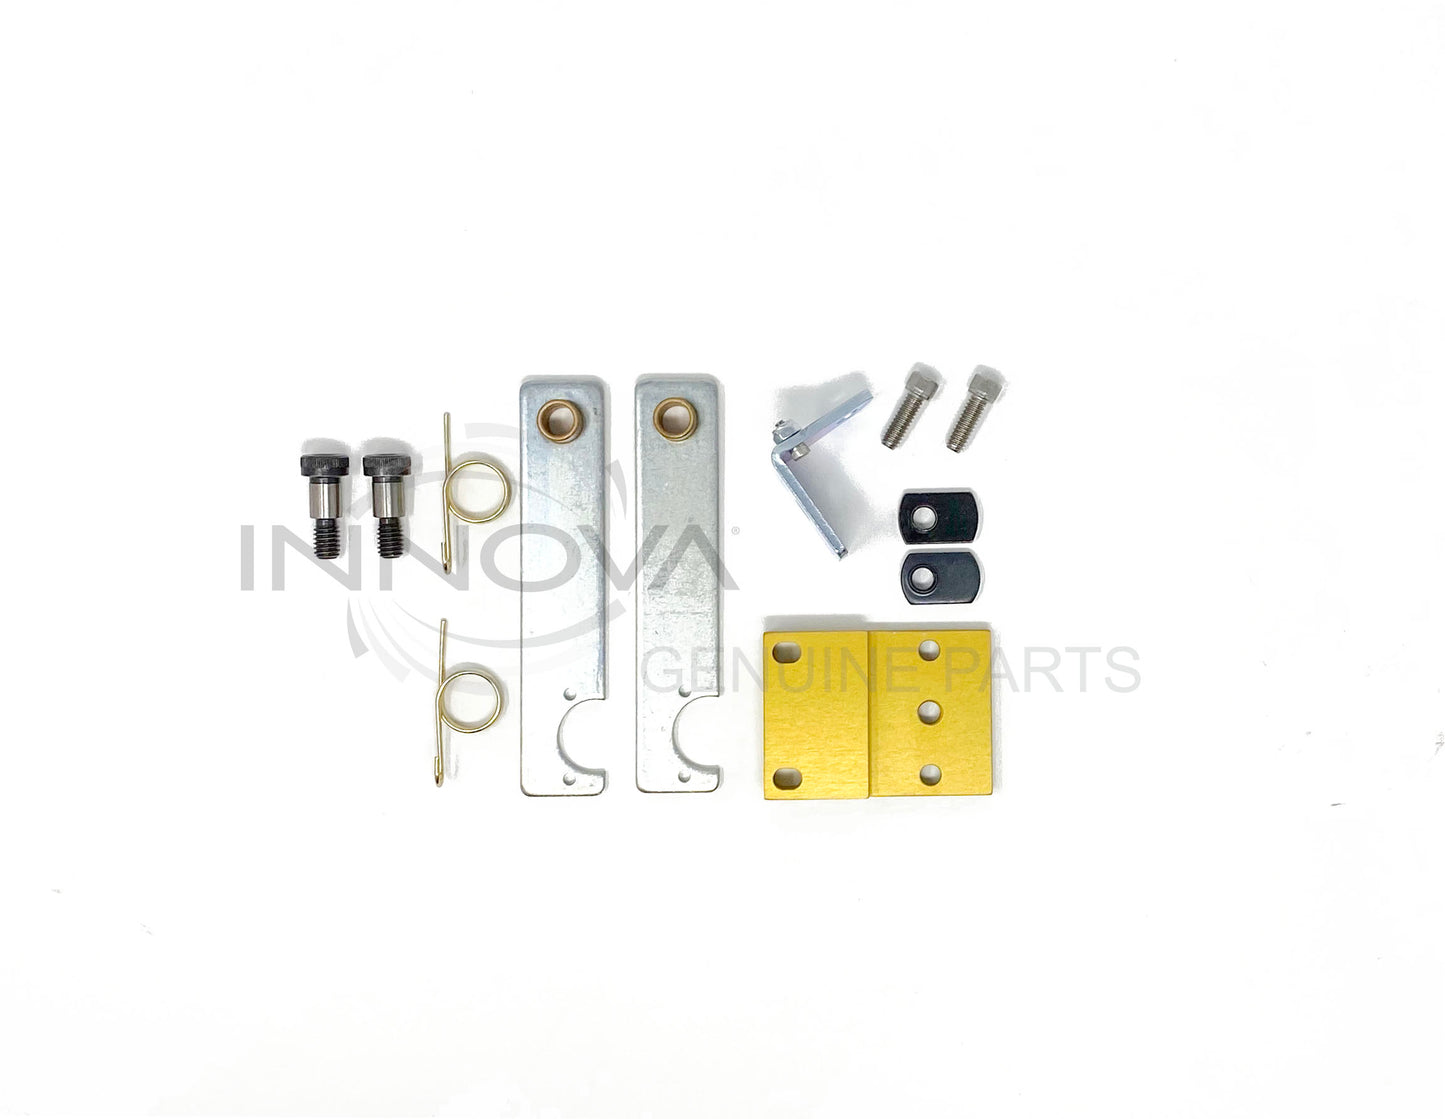 Spring Loaded Encoder Bracket Kit w/ Gold X Axis Caliper Mount